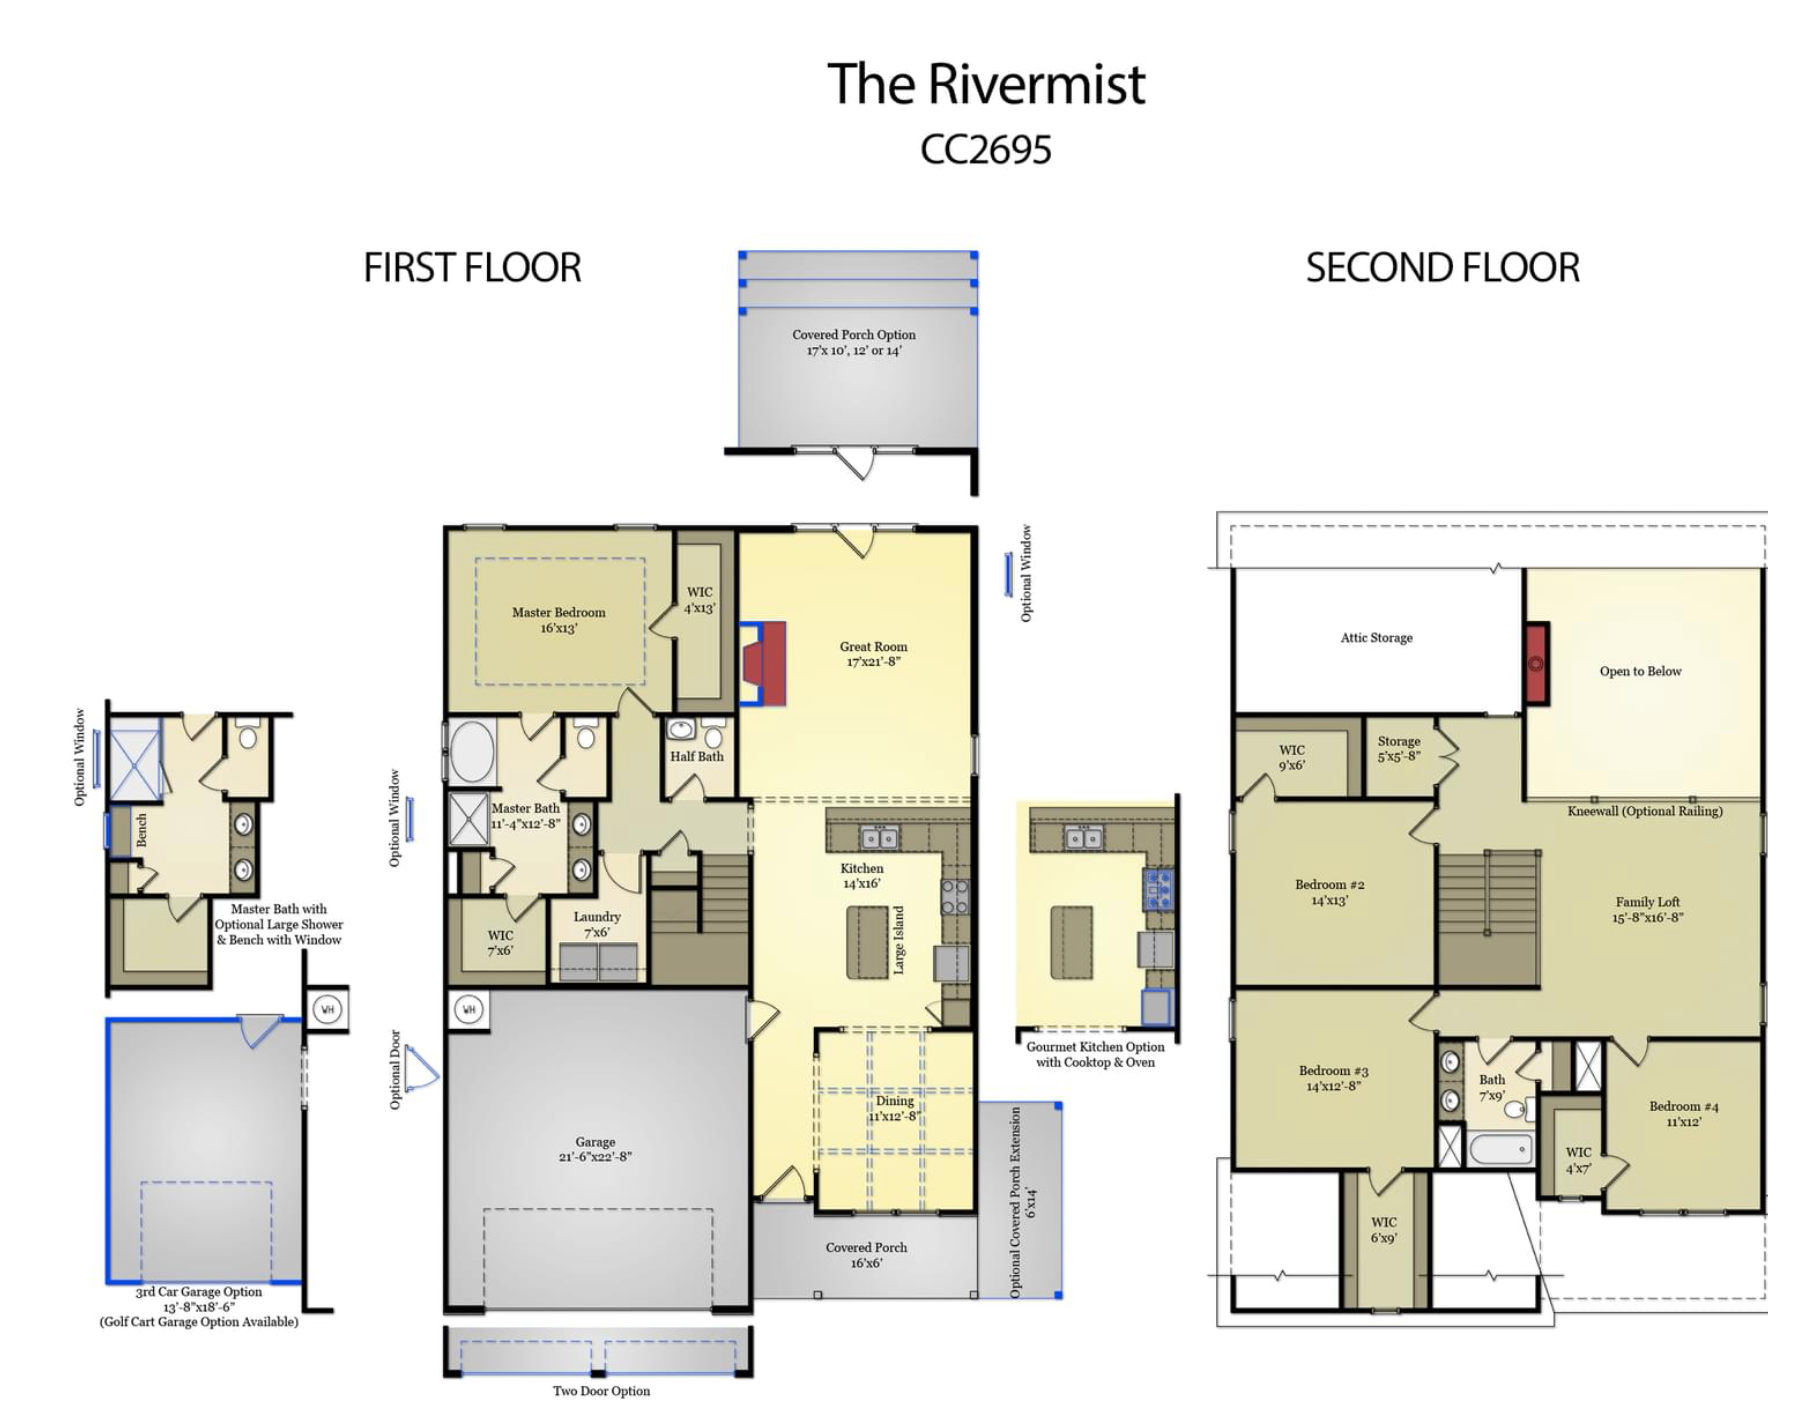 The Rivermist floor plan image